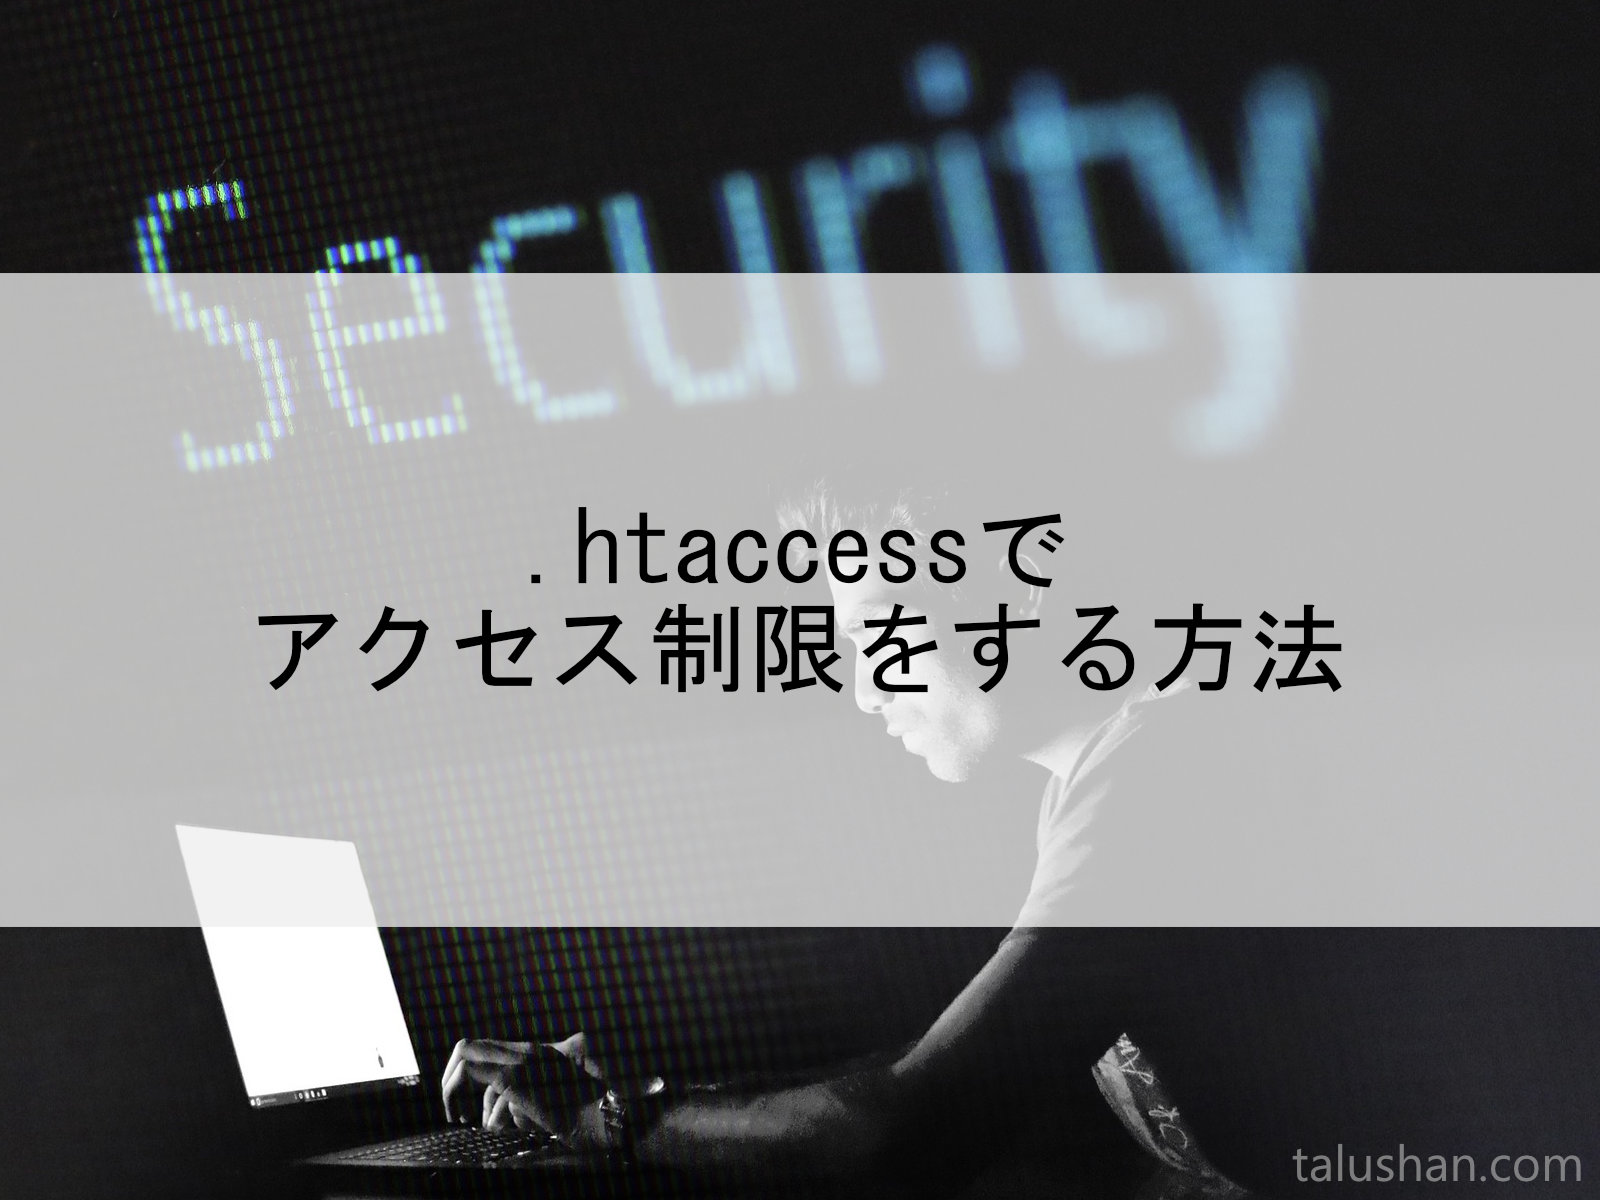 .htaccessでアクセス制限をする方法